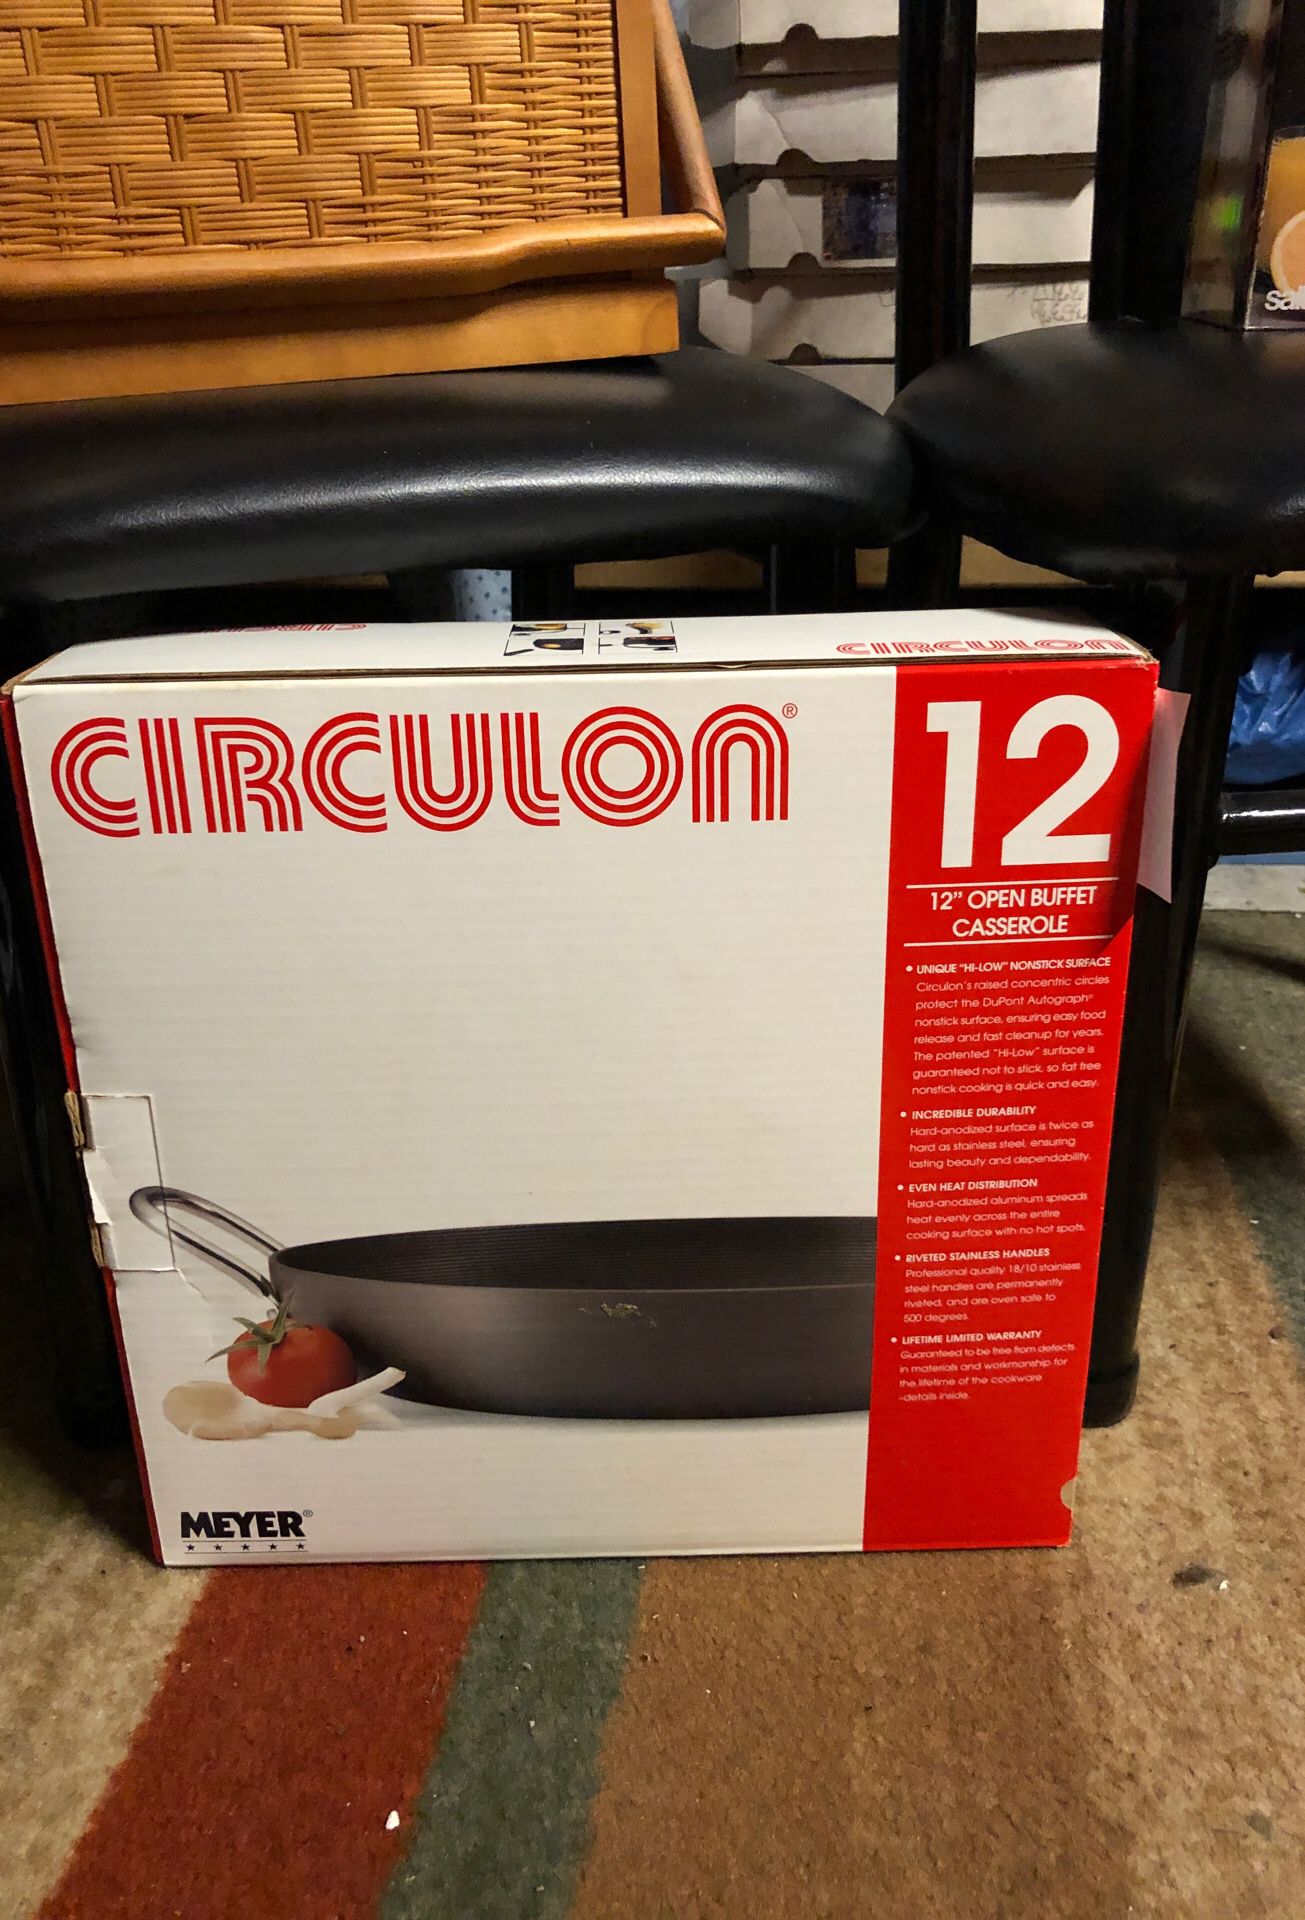 Brand new Circulon cookware!